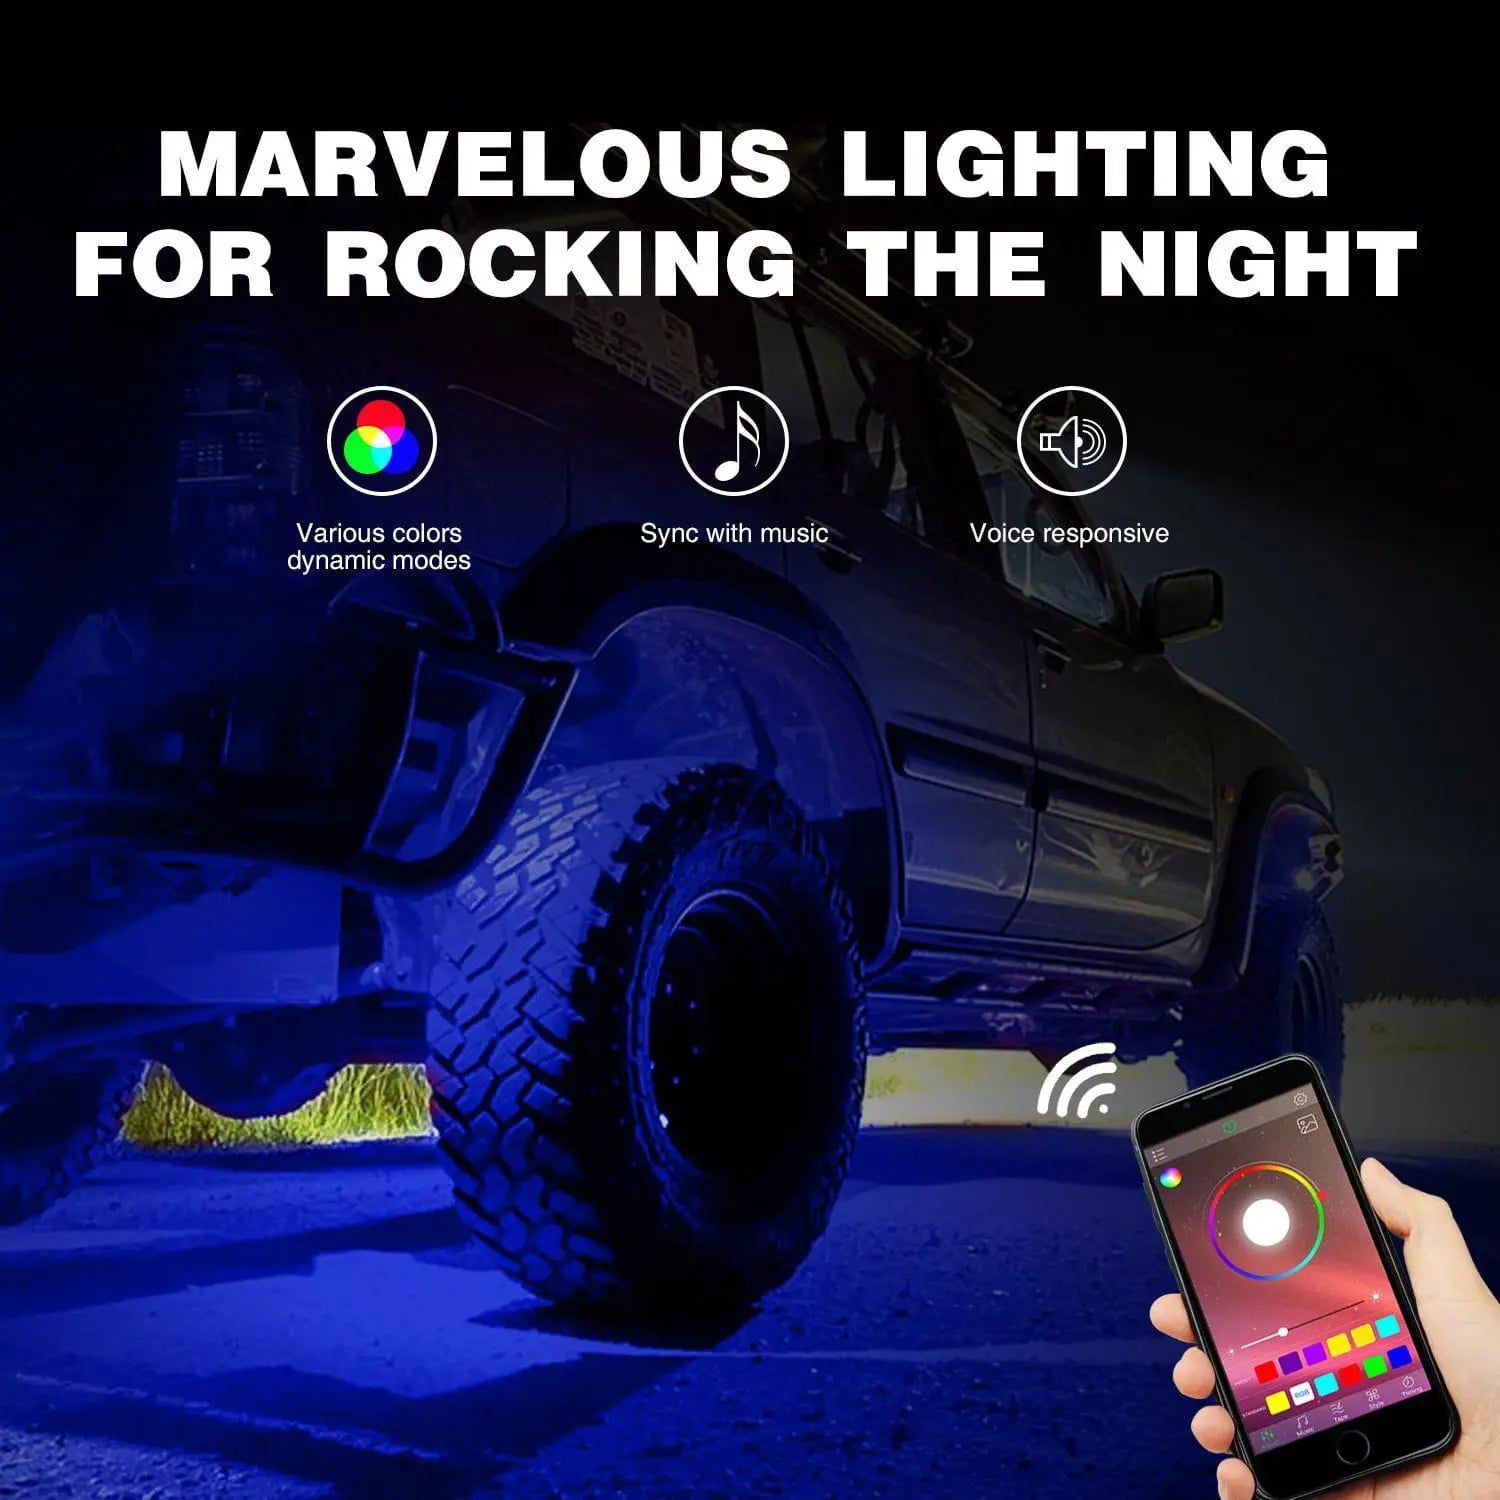 RGB Rock Lights LED RGB Rock Lights Bluetooth Underglow Multicolor Neon (4 Pods)